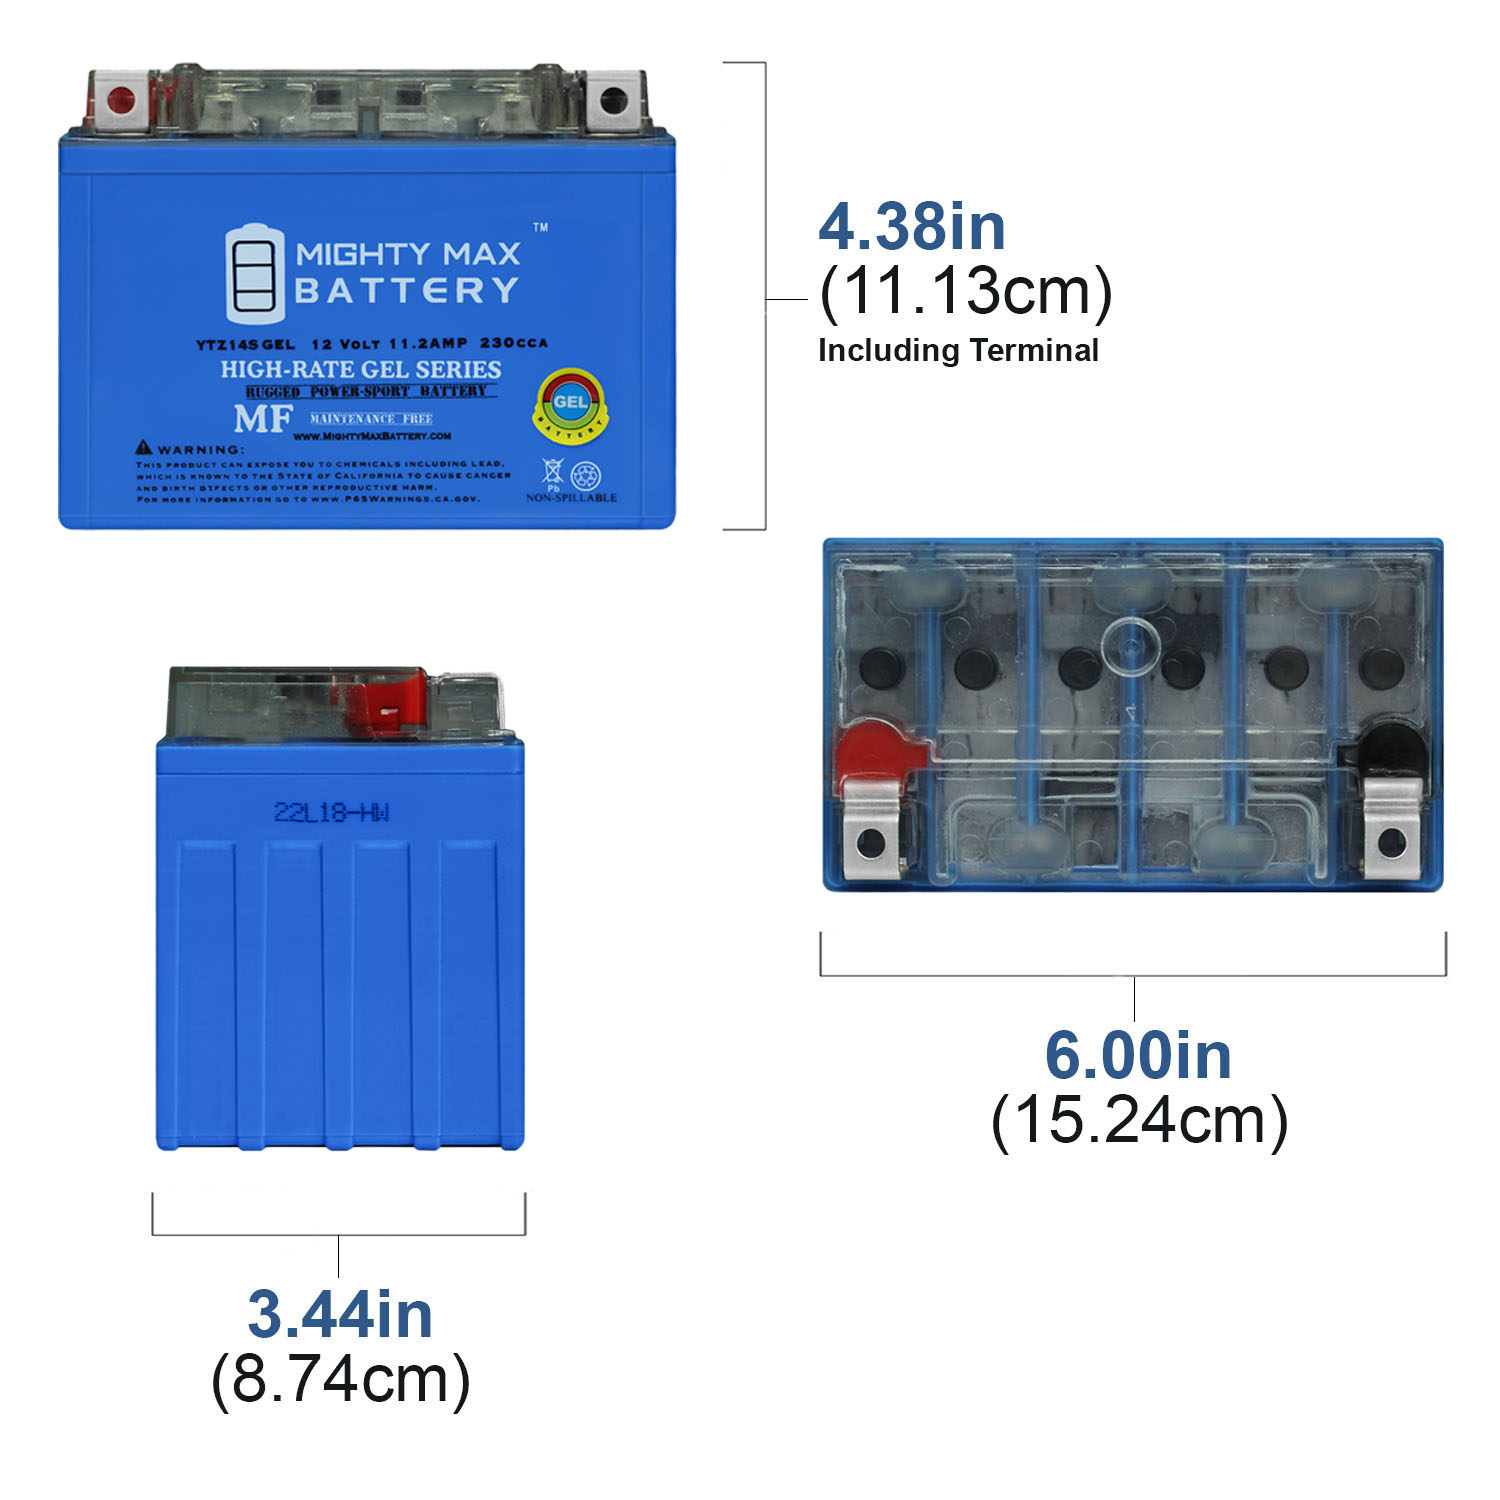 Batterie gel Intact GEL12-12-BS